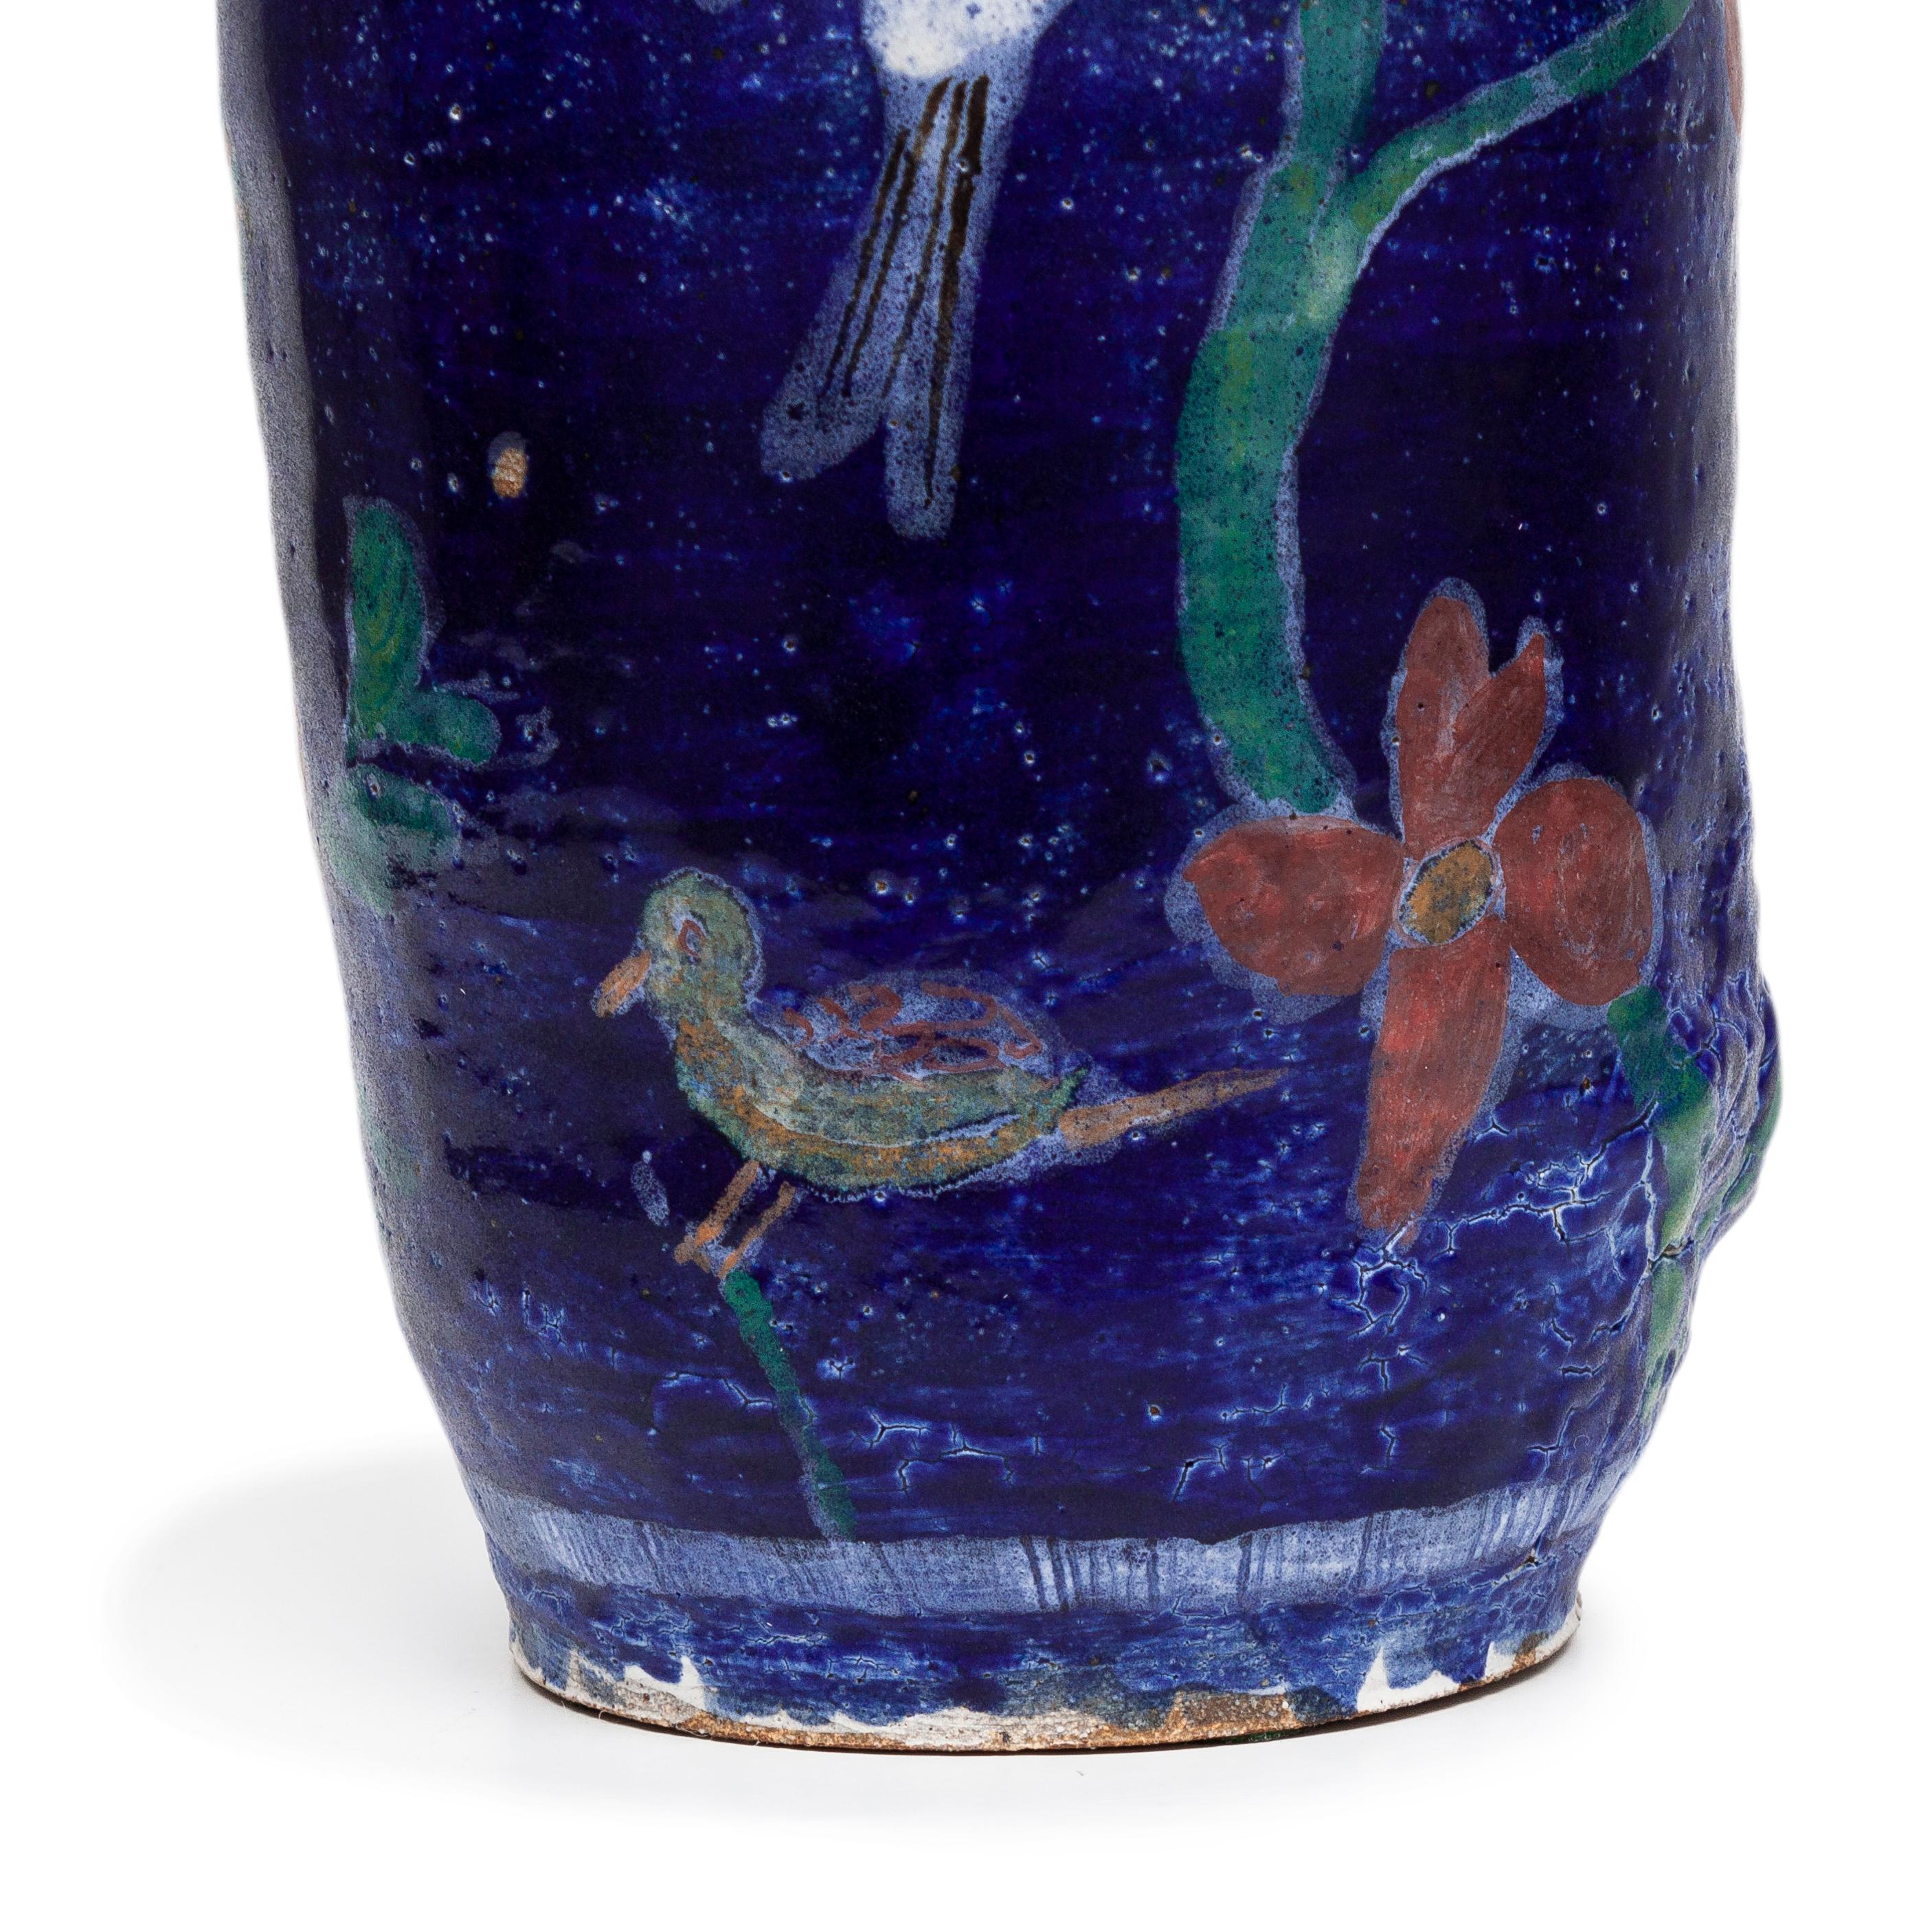 Michael and Magdalena Suarez Frimkess
Bird and Flower Vase
2000
Stoneware and Glaze
13 x 6.5